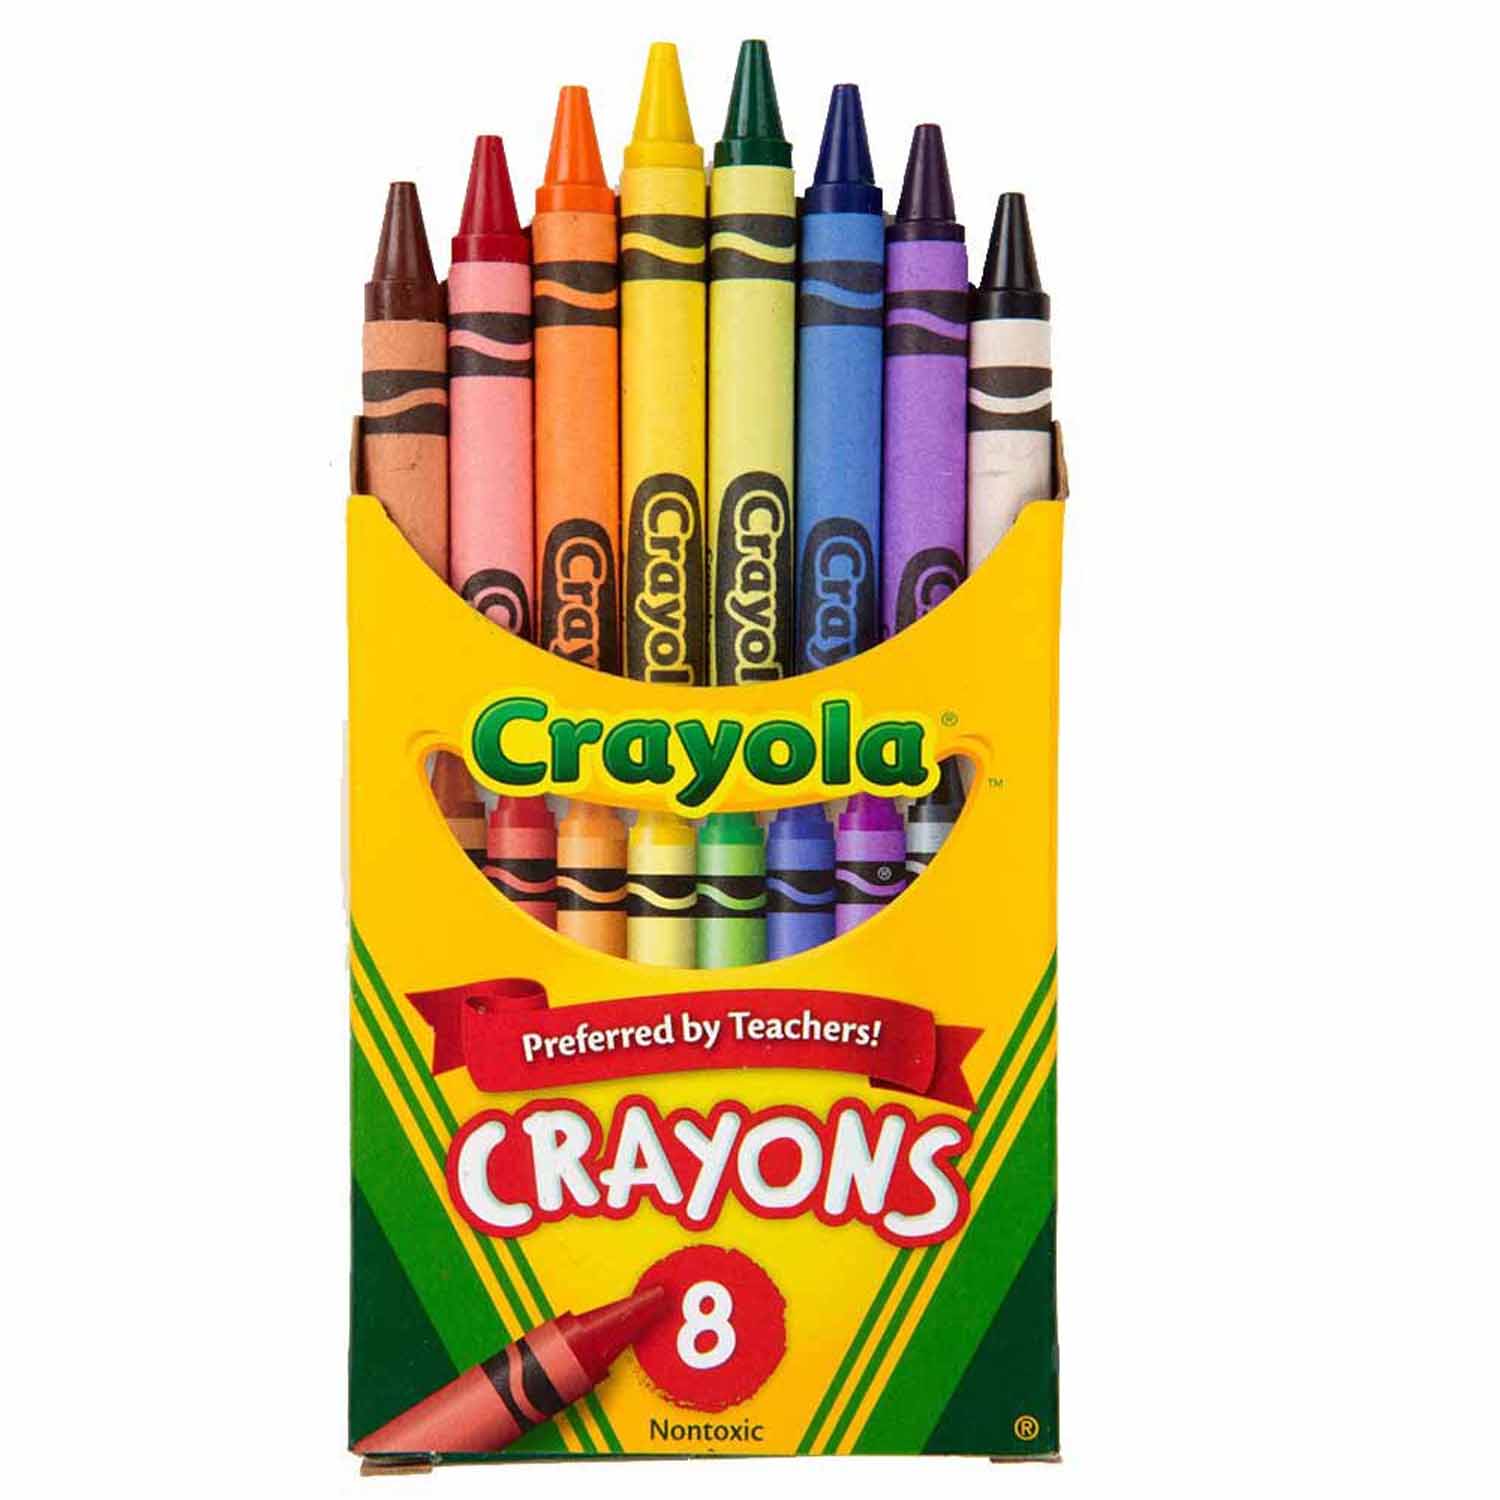 Davis & Stanton - Promotional Products - Richardson, TX & Bellevue, WA:  BigBox 8-Count Crayons - 192 Packs (Case of 192)